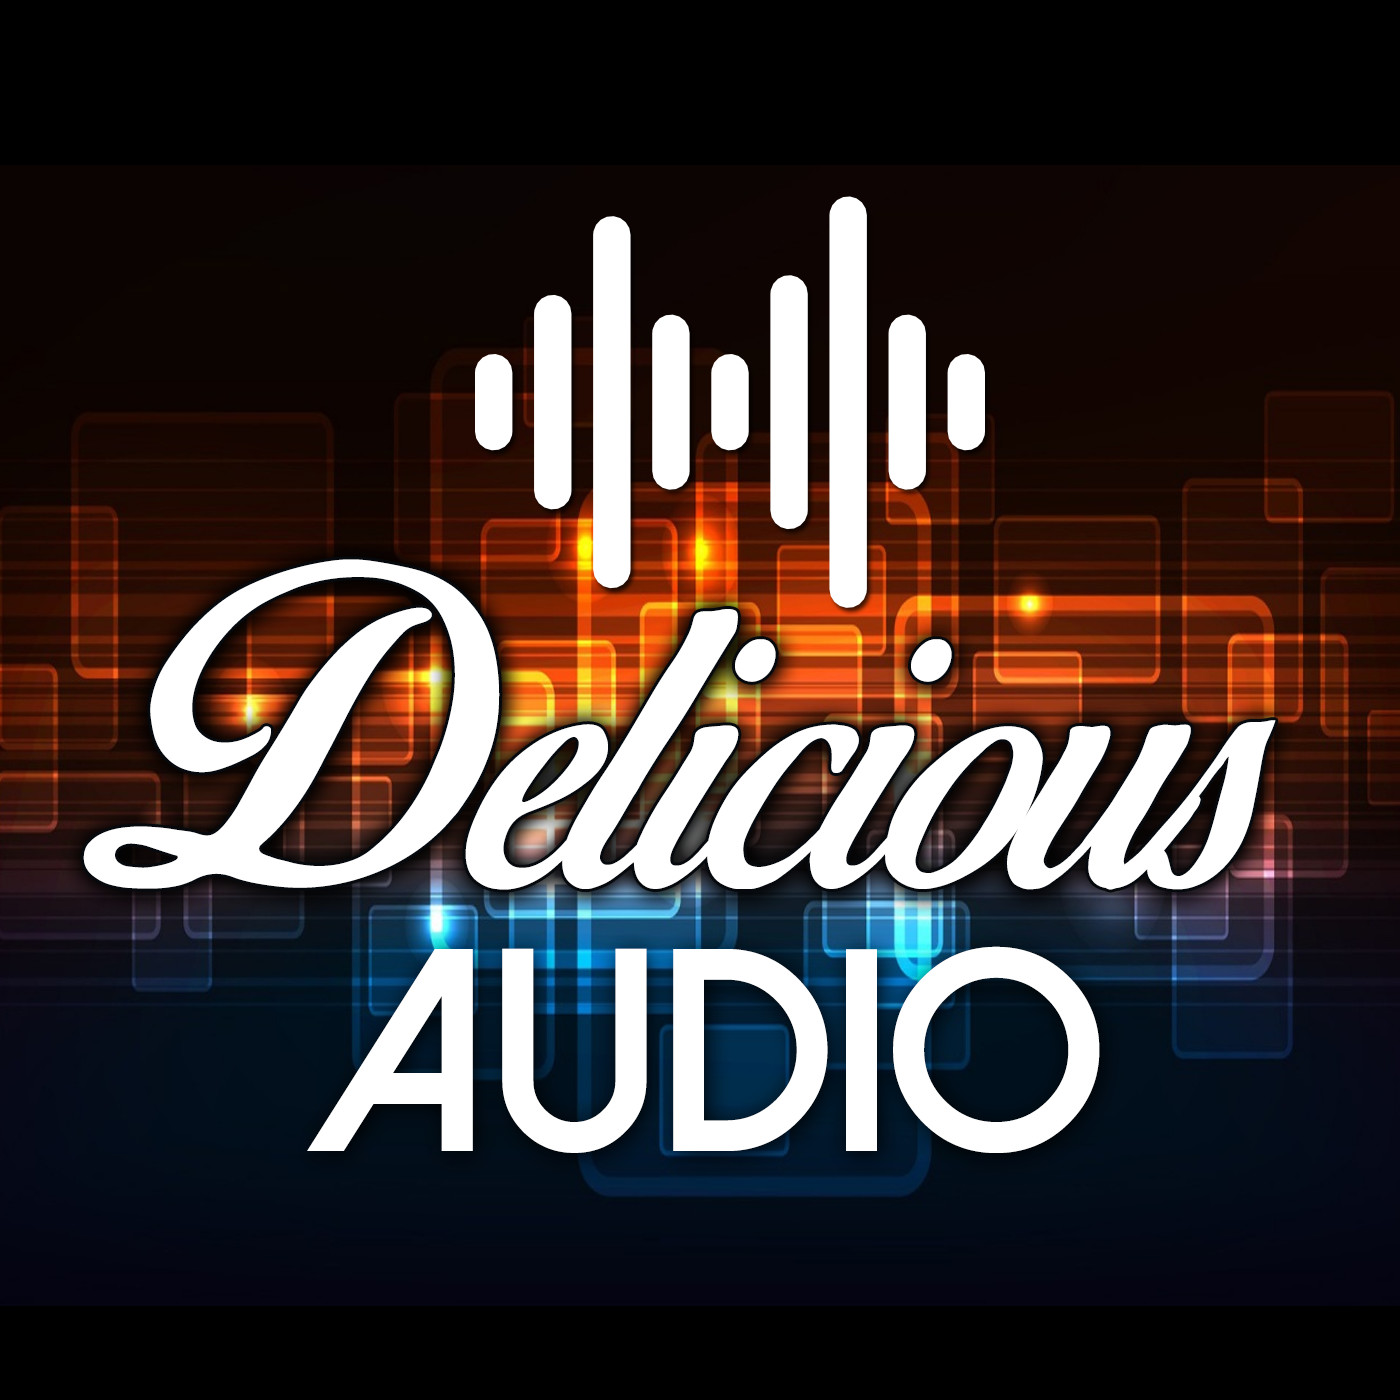 072518 Delicious Audio